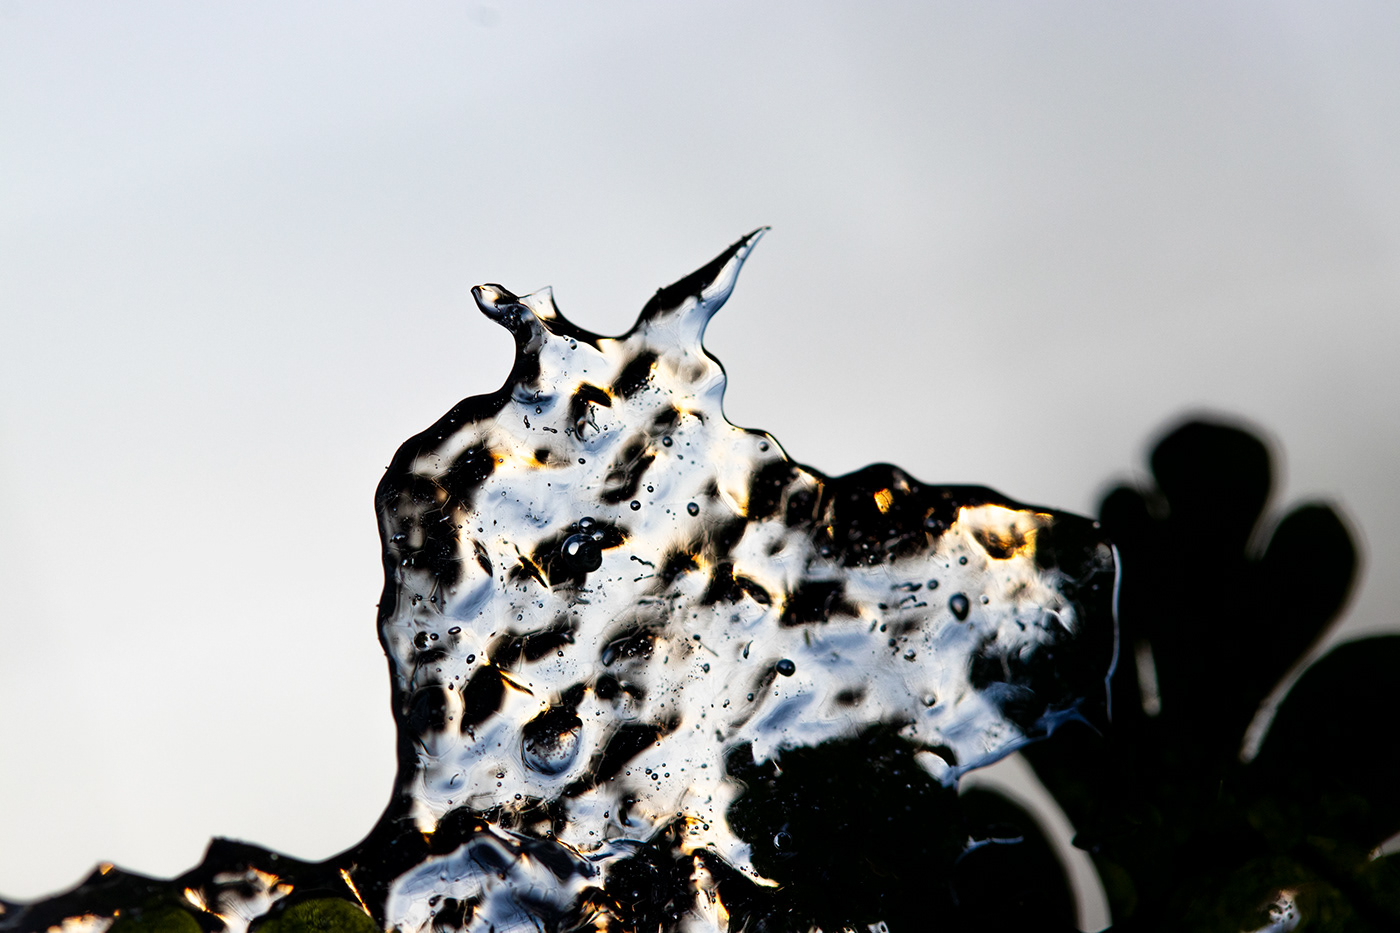 bretagne freezing frost macrophotographie macrophotography neige